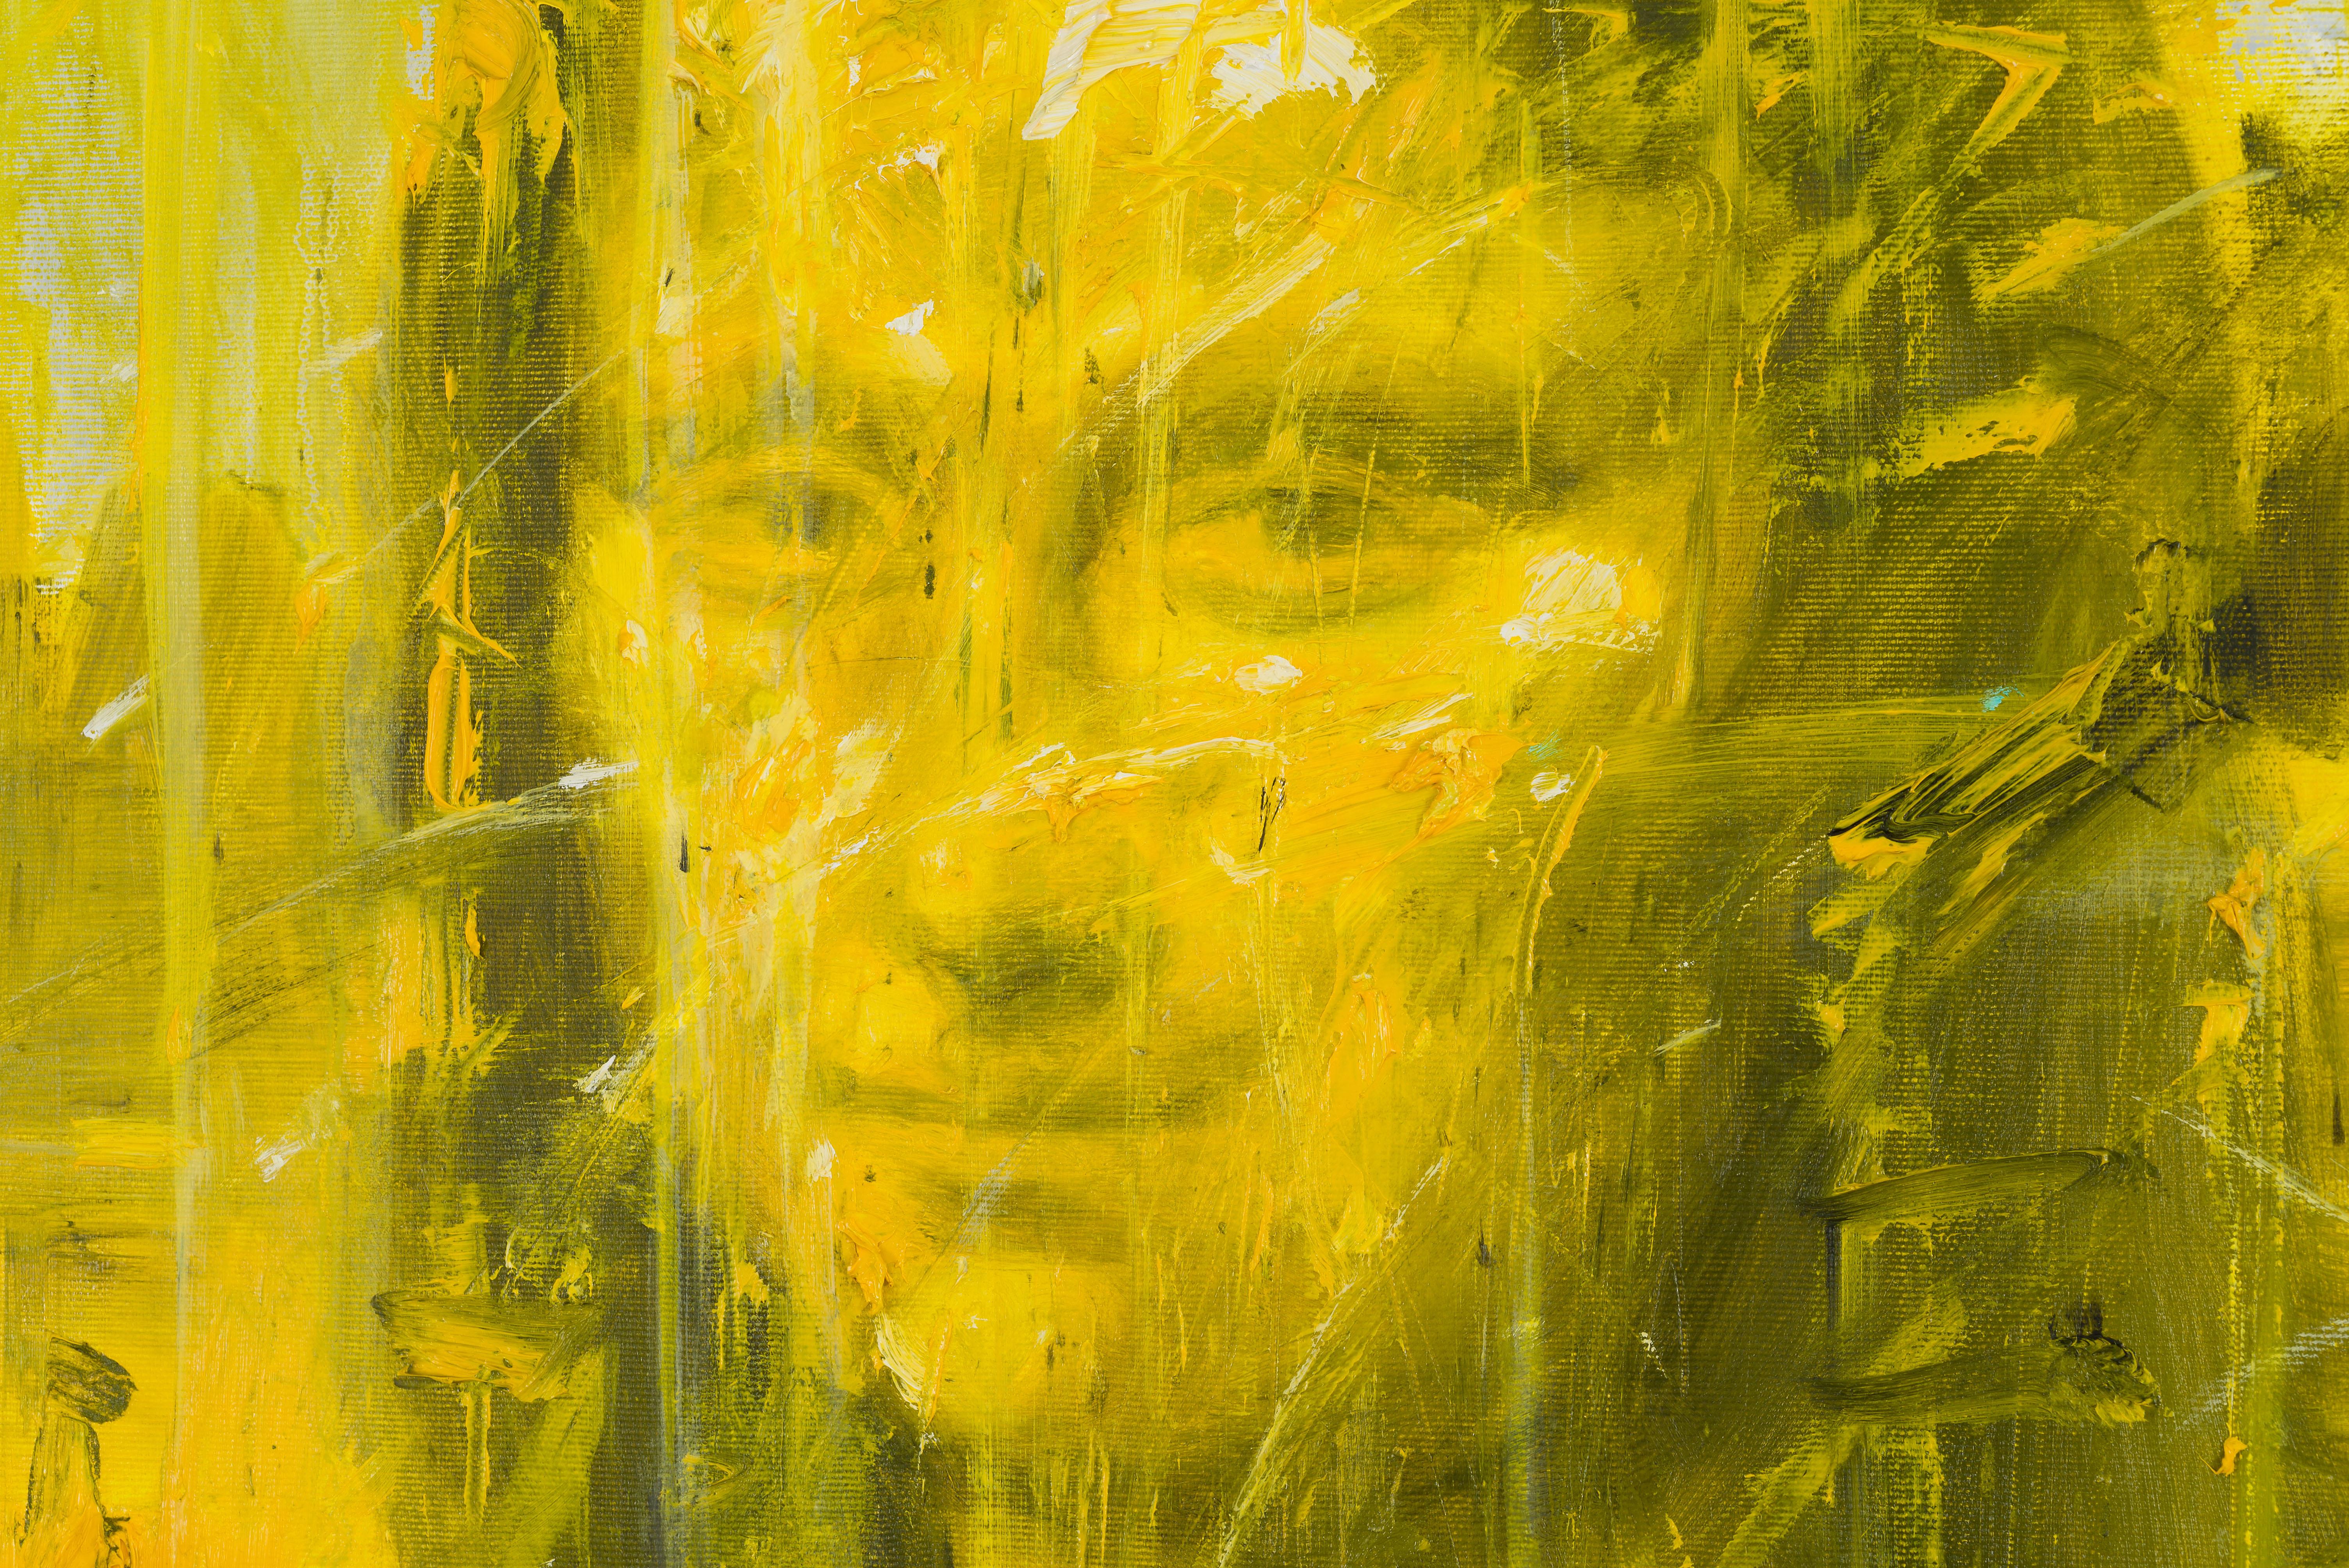 La gioconda - contemporary art work of Mona Lisa oil on canvas portrait  - Painting by Milan Markovich